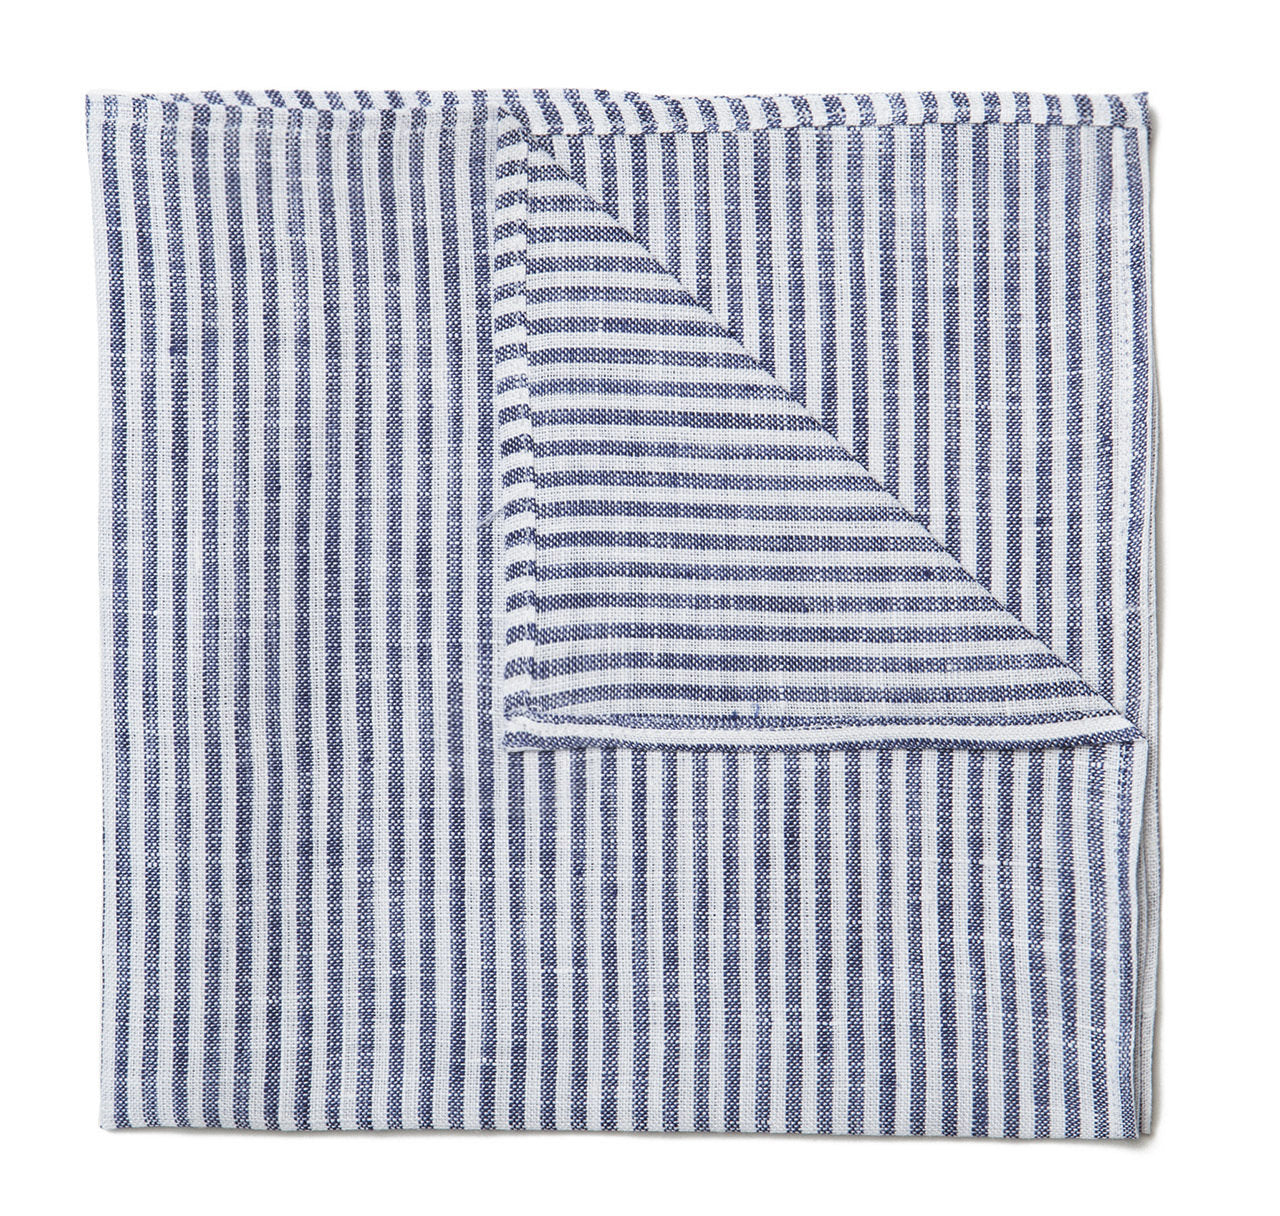 Sir Jack's Navy & White Stripe Linen Pocket Square